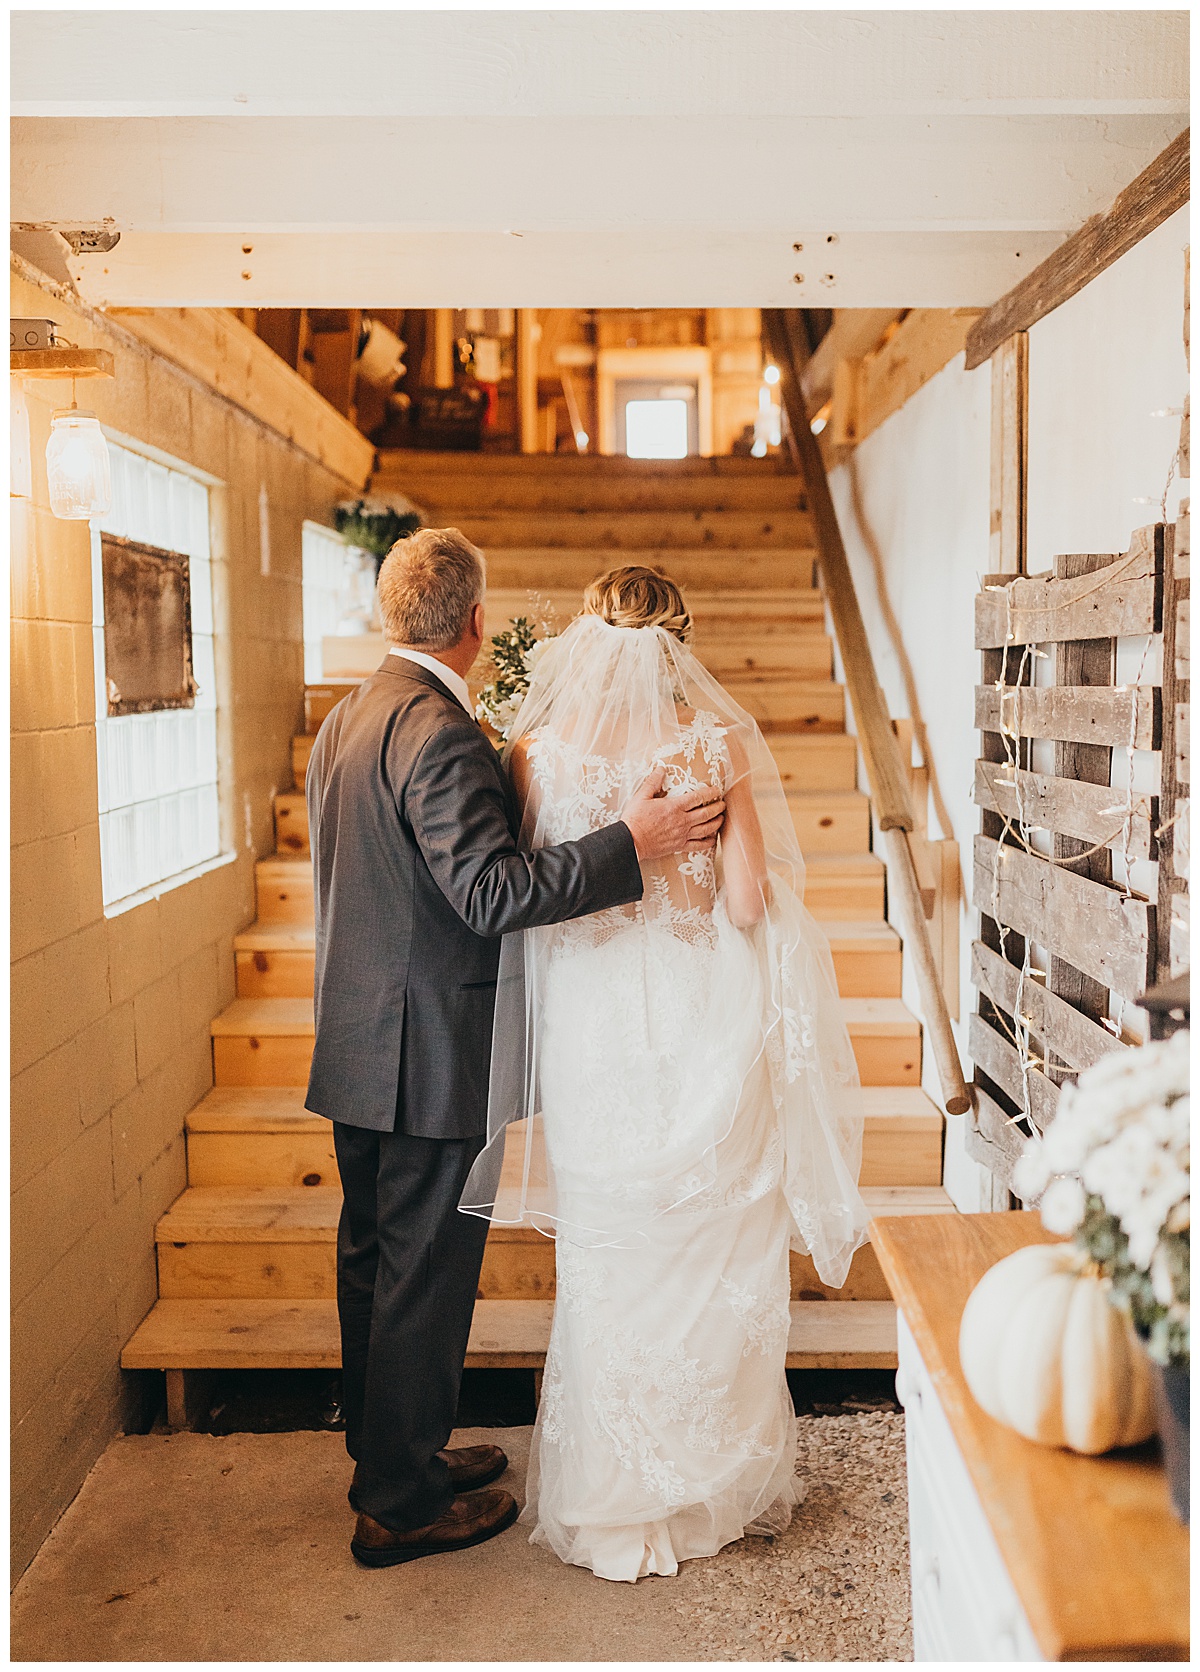 Wedding ceremony photography at Poplar Creek Barn in Oshkosh, Wisconsin